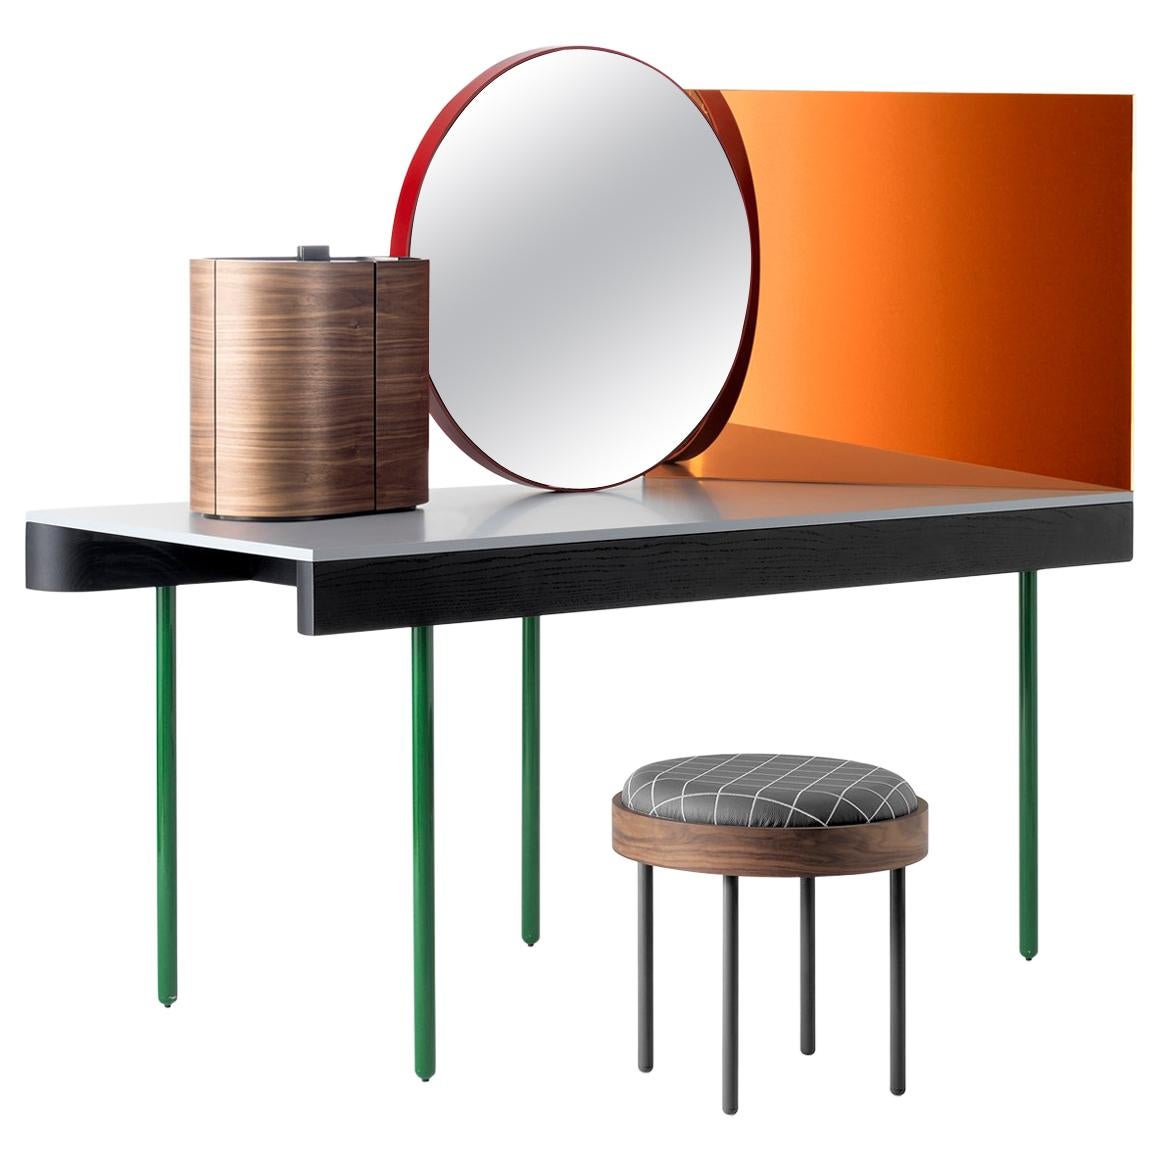 Vanity cabinet designed by Doshi Levien